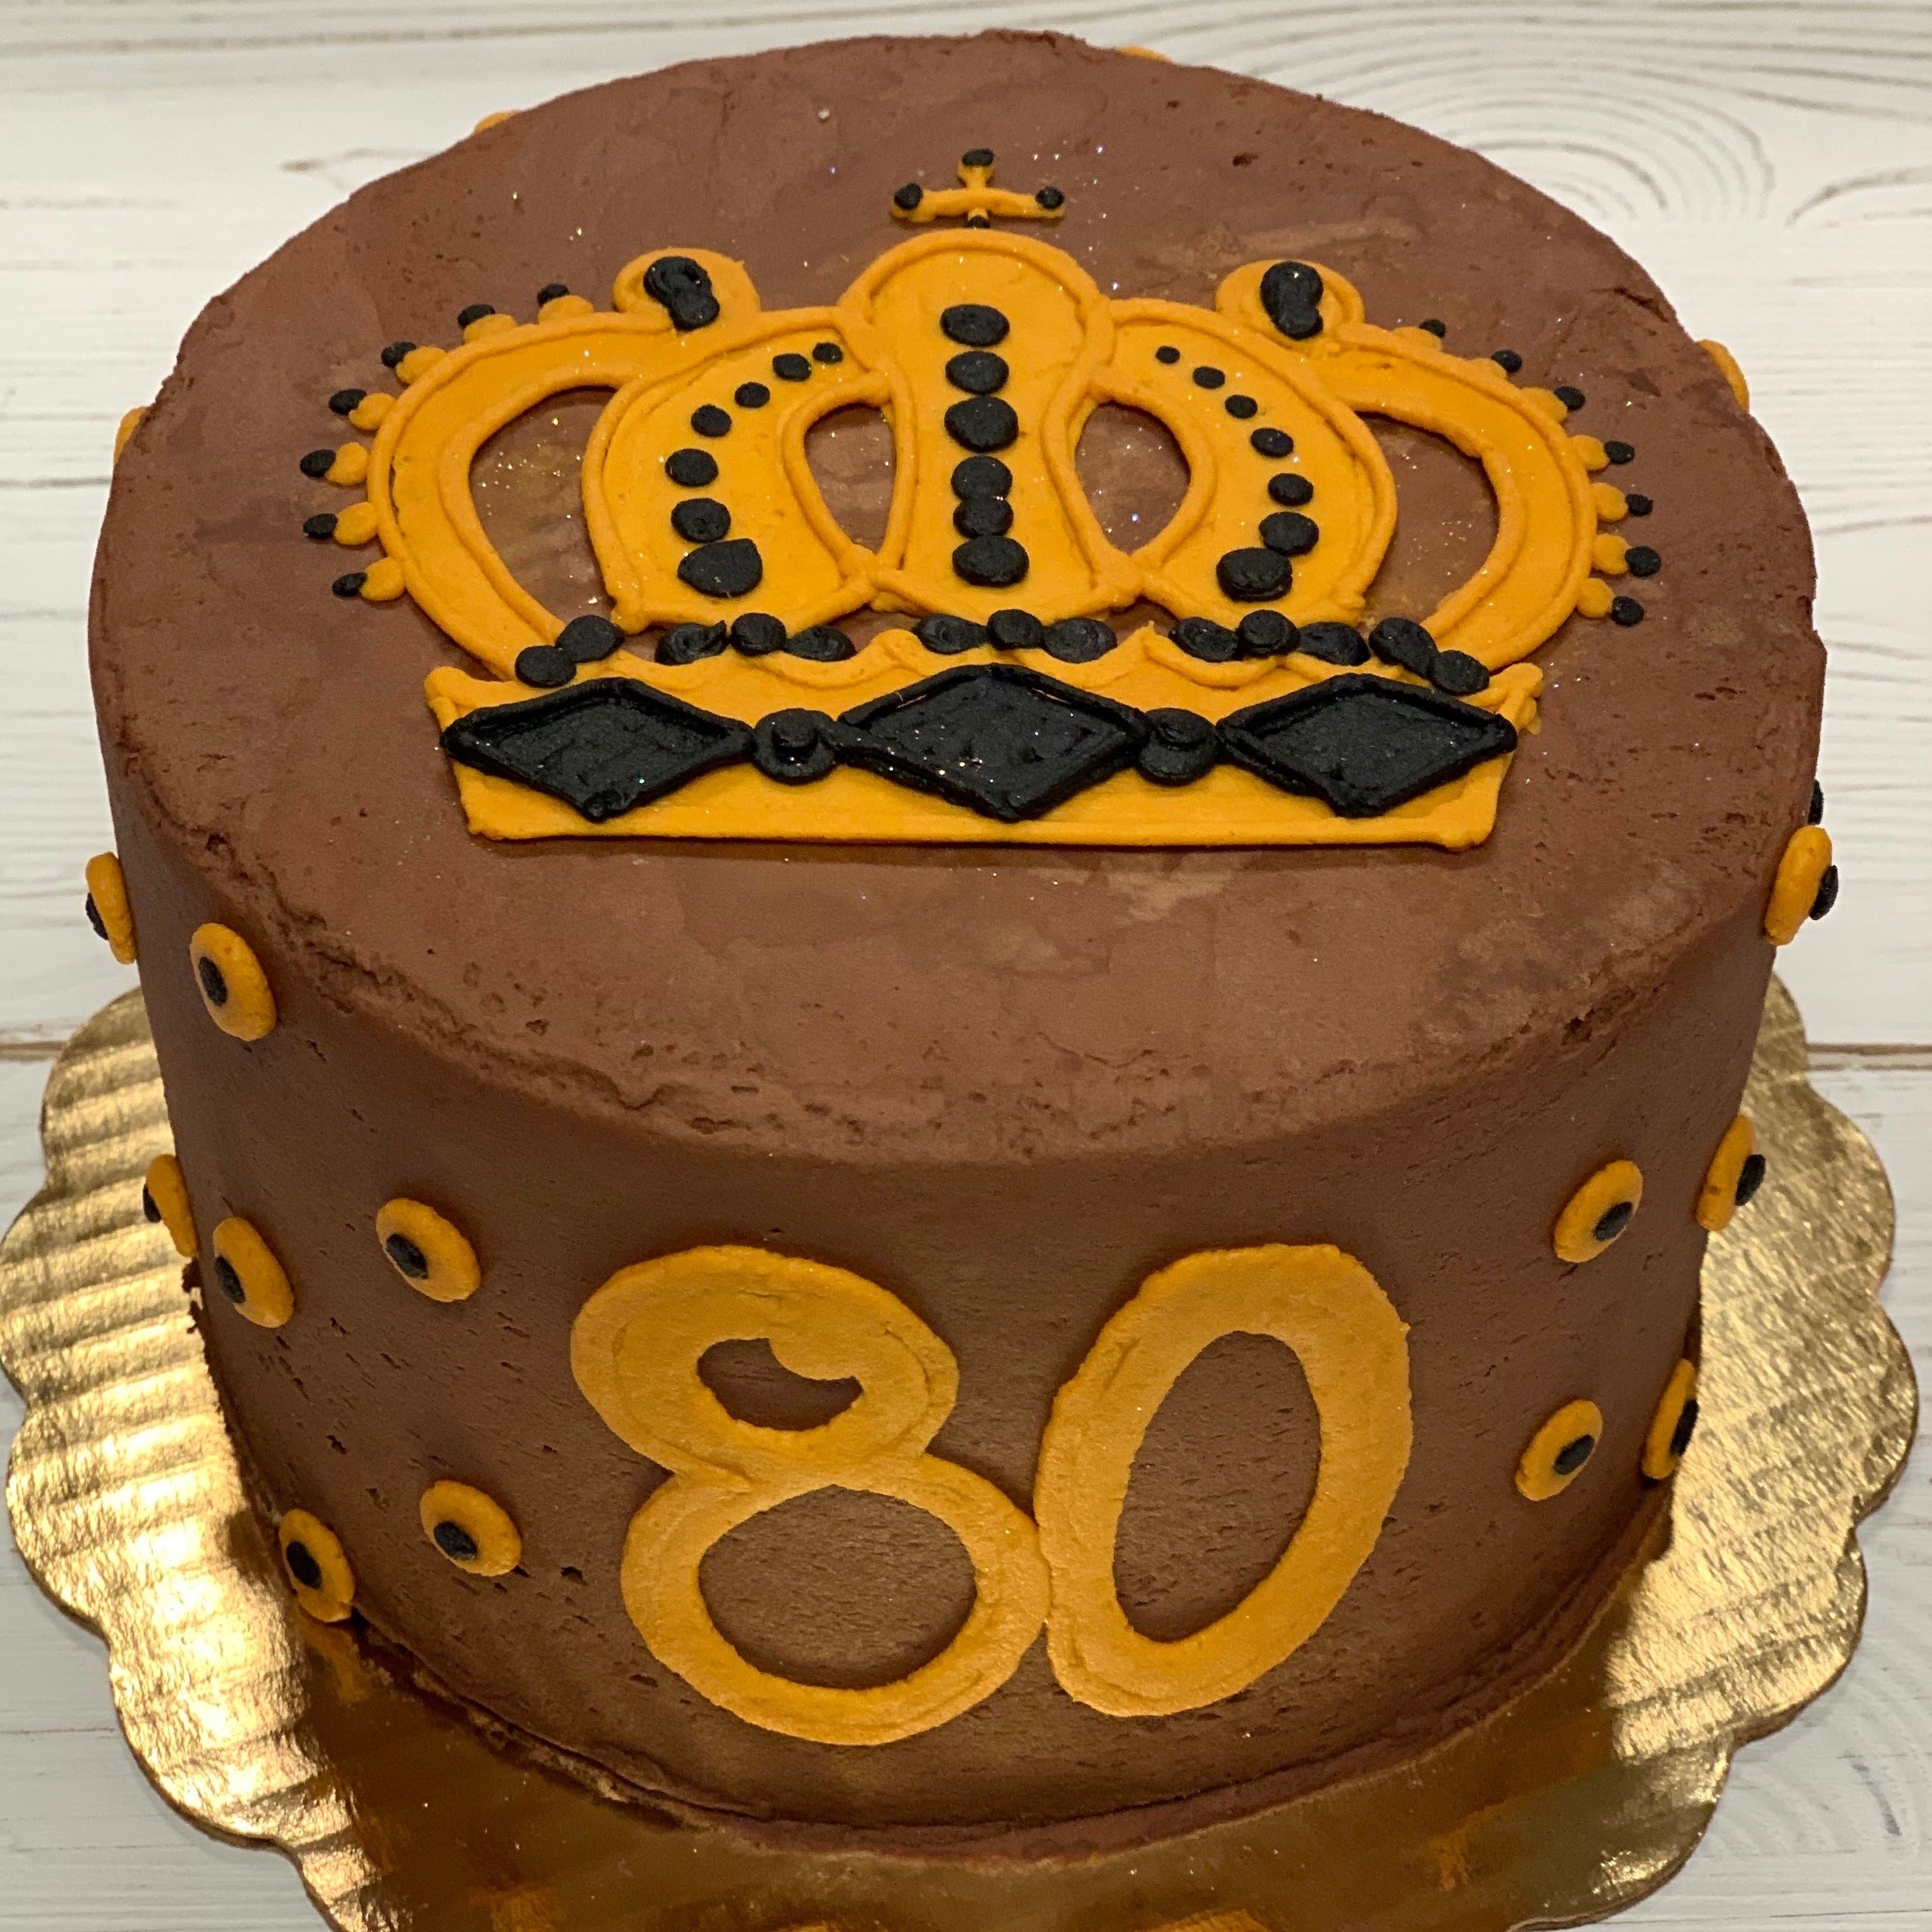 Princess Goo cake - The Great British Bake Off | The Great British Bake Off